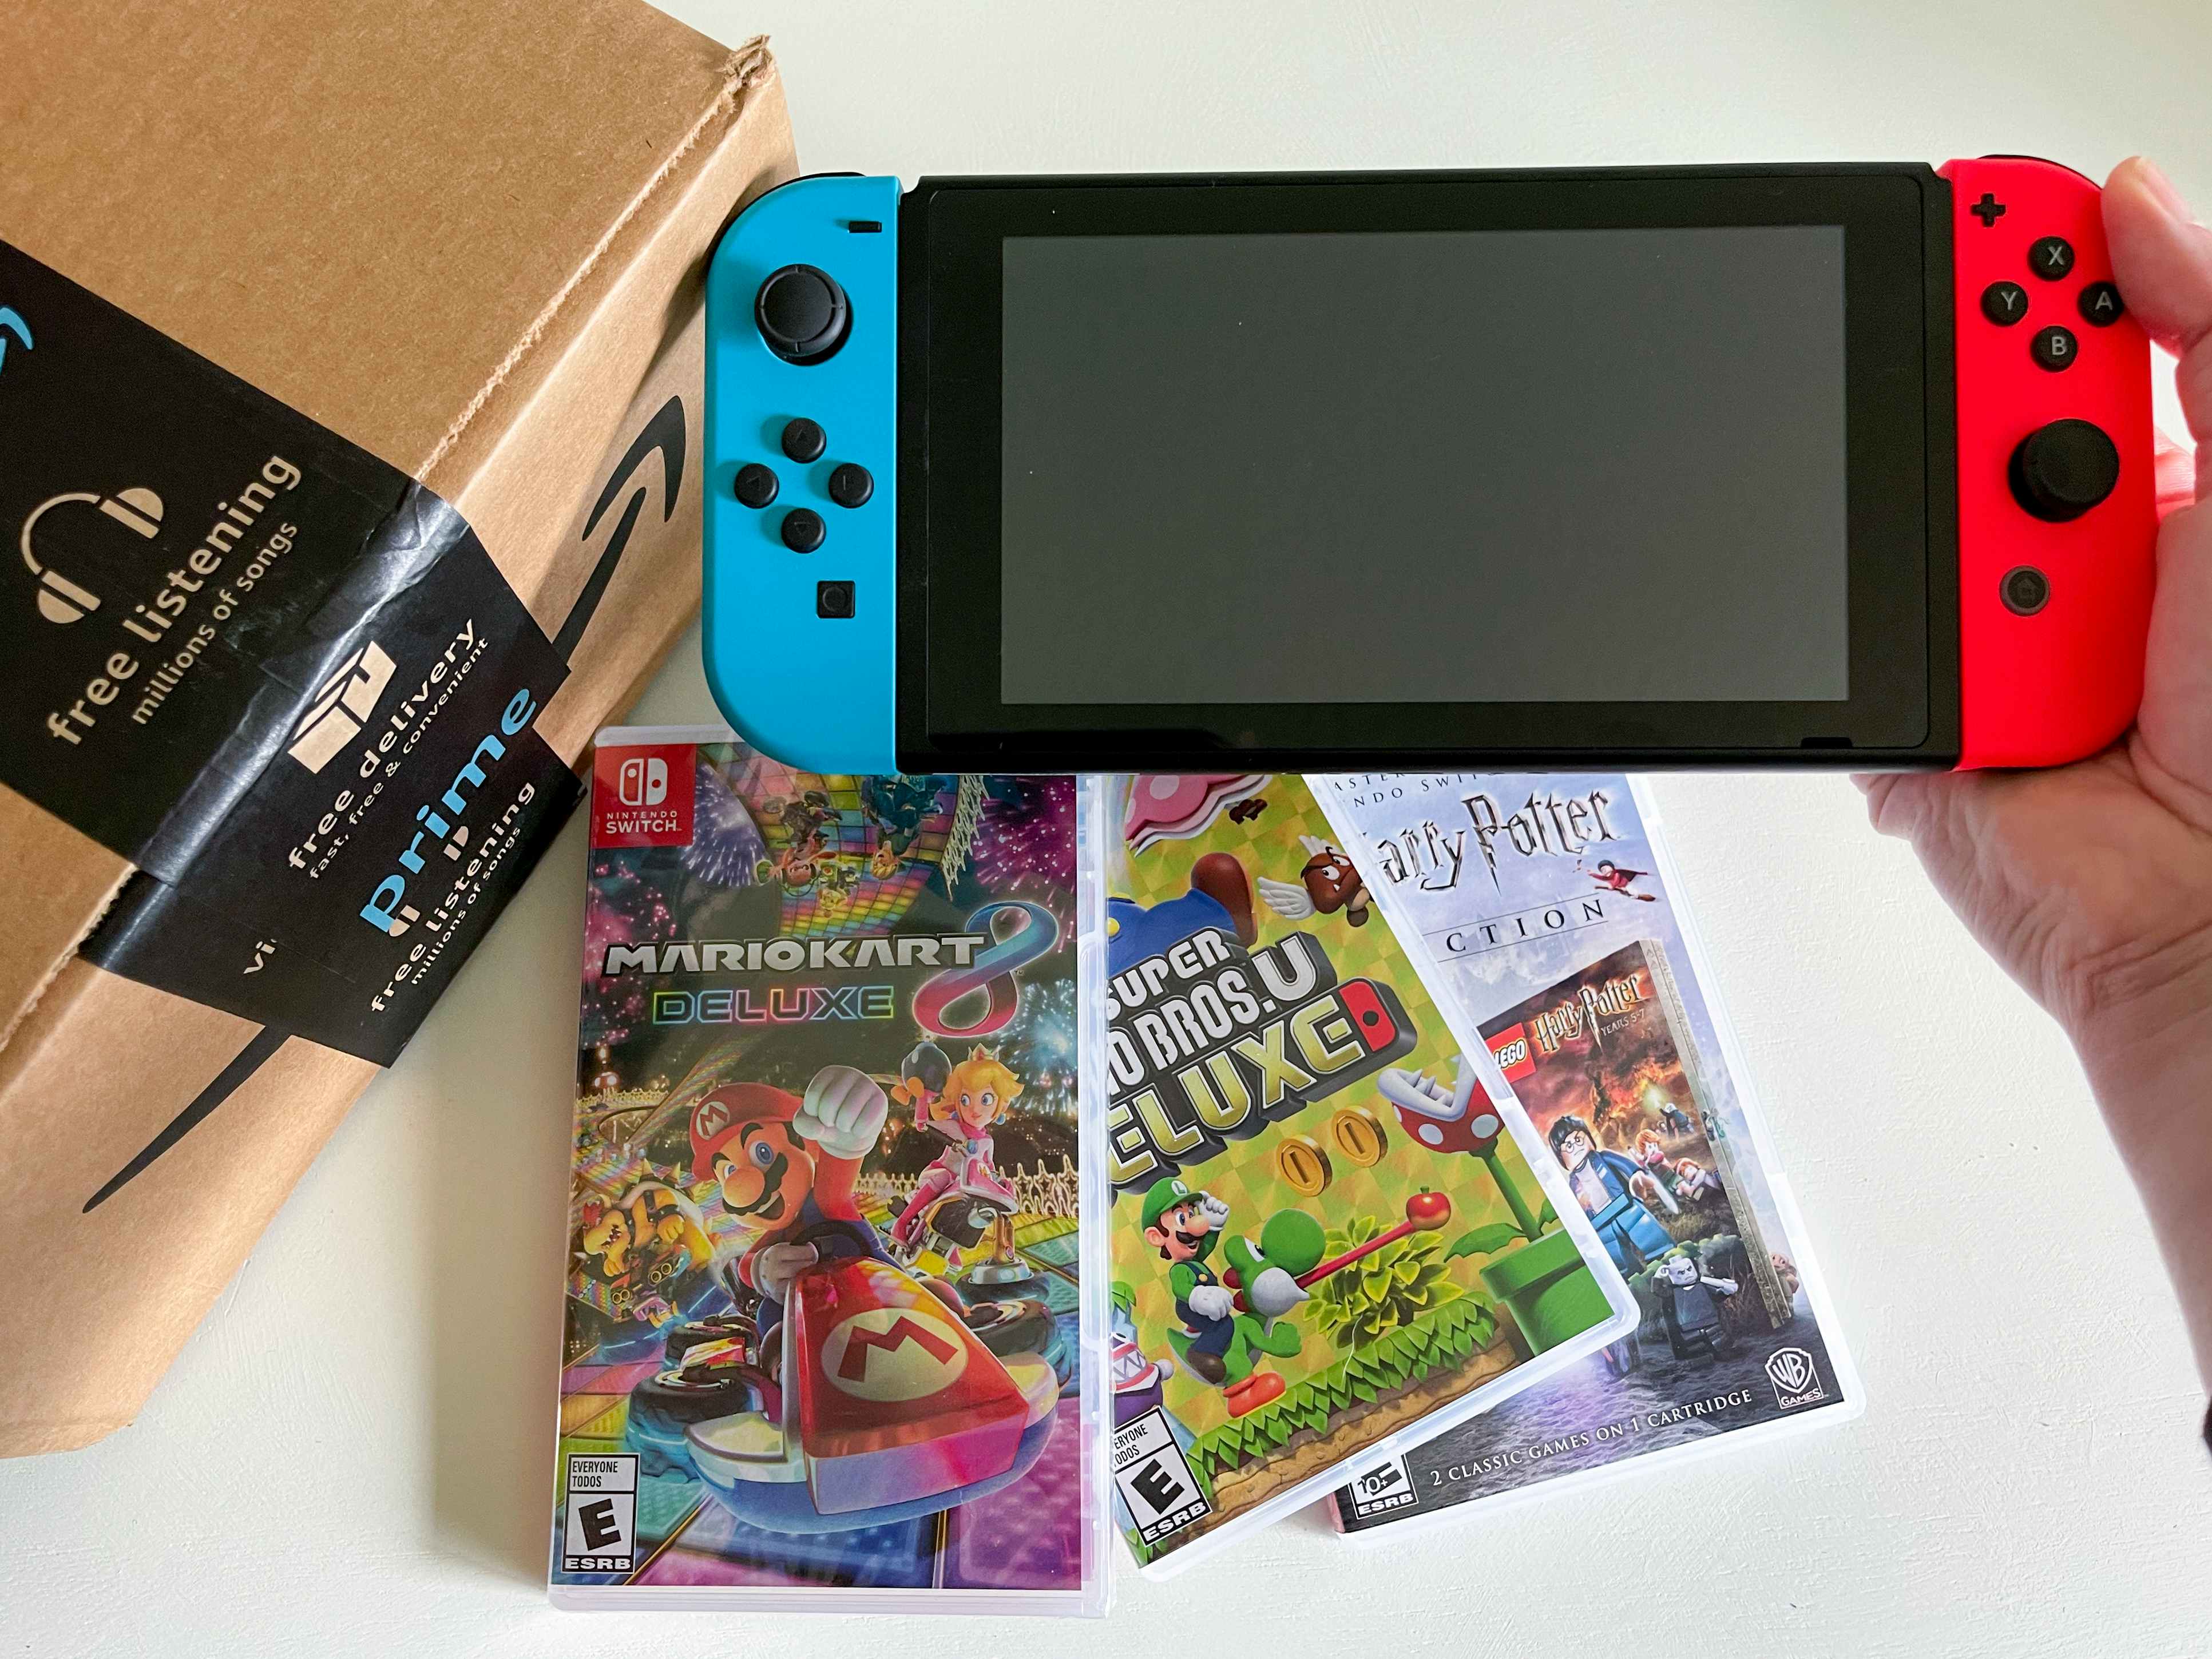 Nintendo Switch Black Friday 2020 bundle: Will it be restocked?